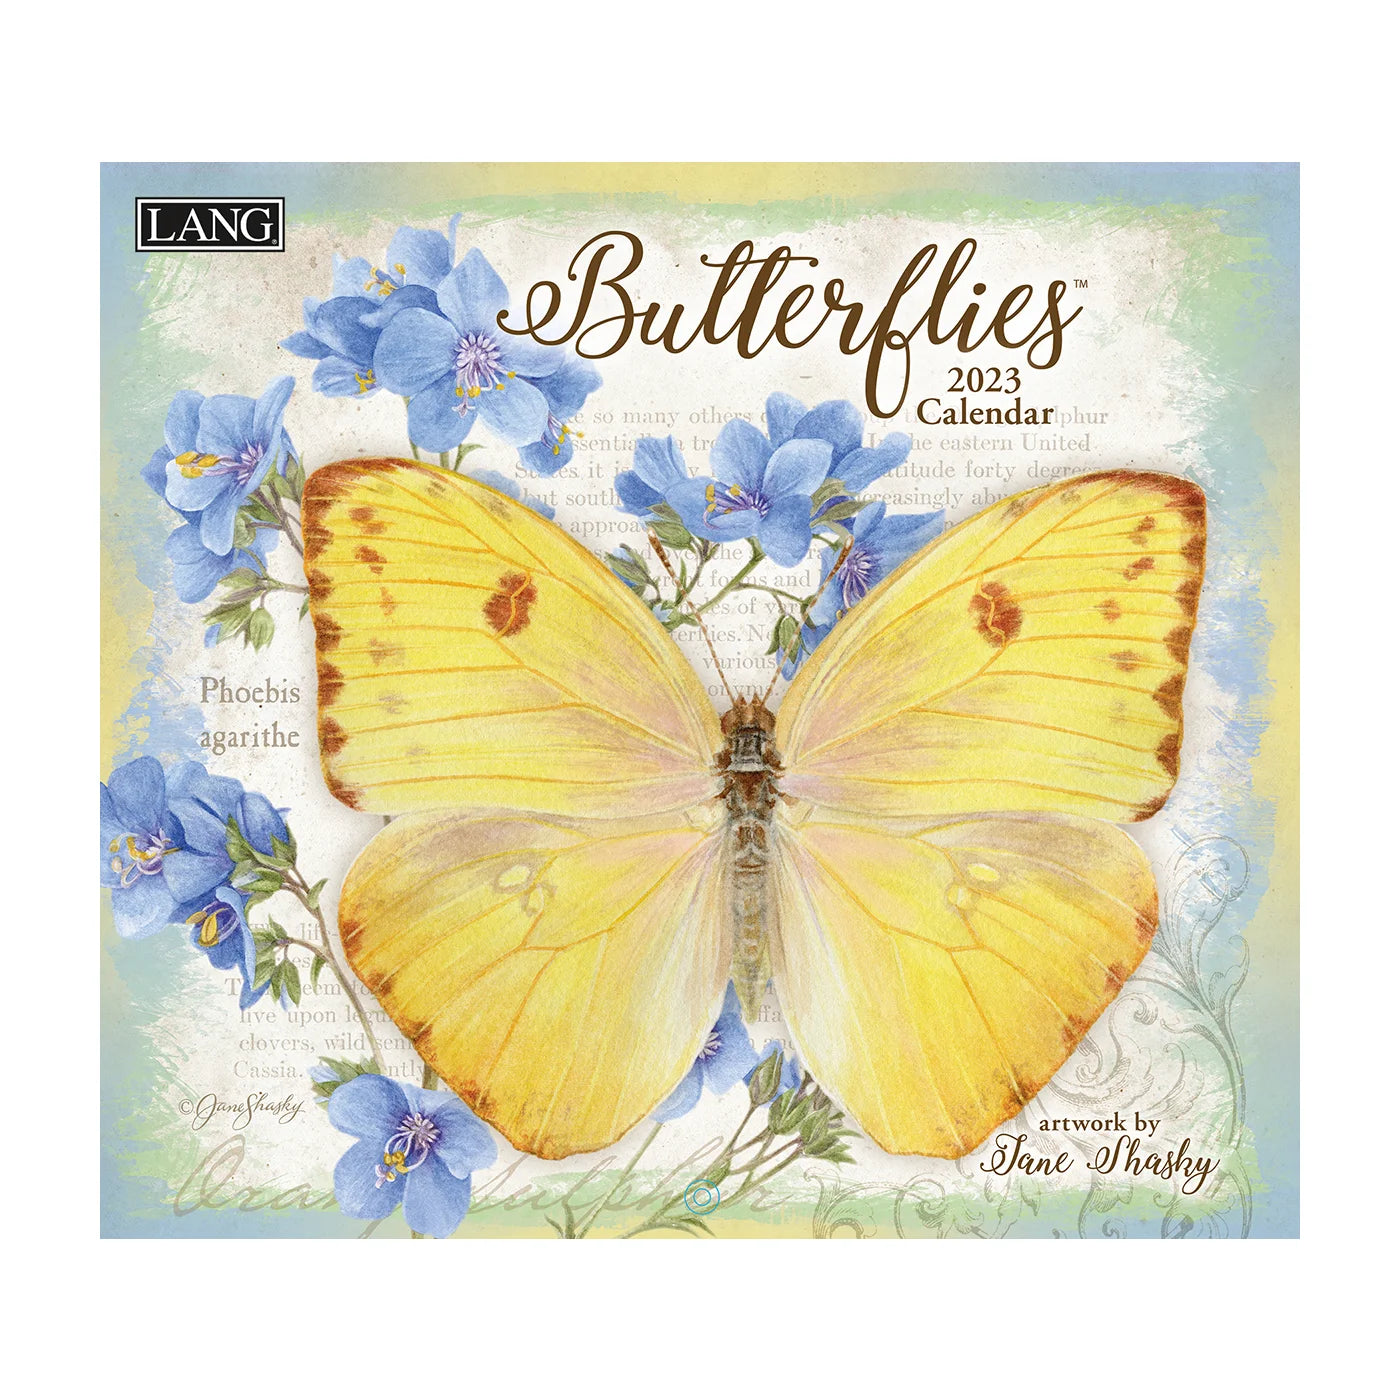 2023 LANG Butterflies by Jane Shasky - Deluxe Wall Calendar